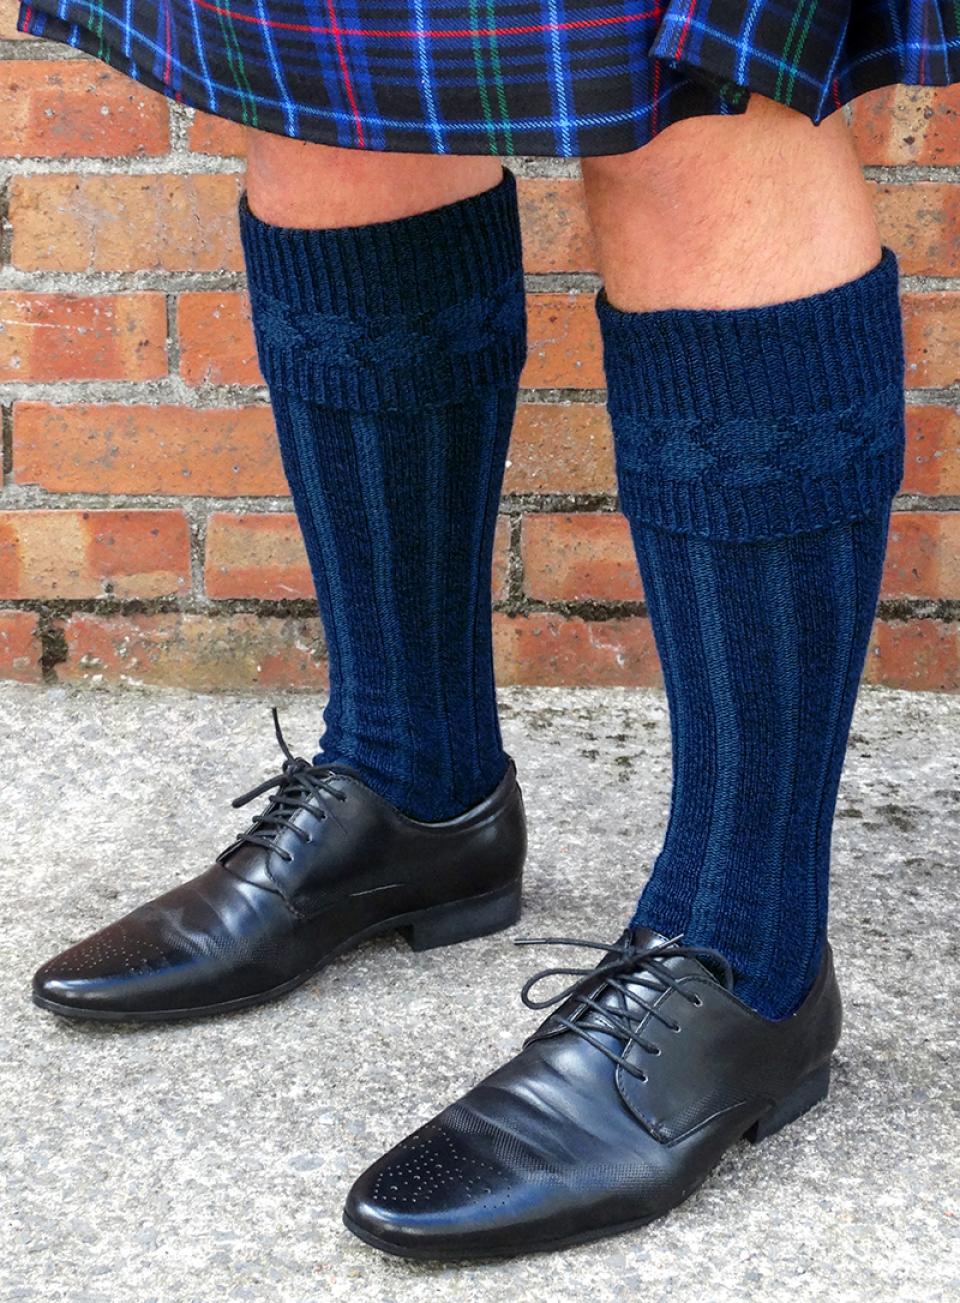 Lomond Blue Kilt Hose (Socks)